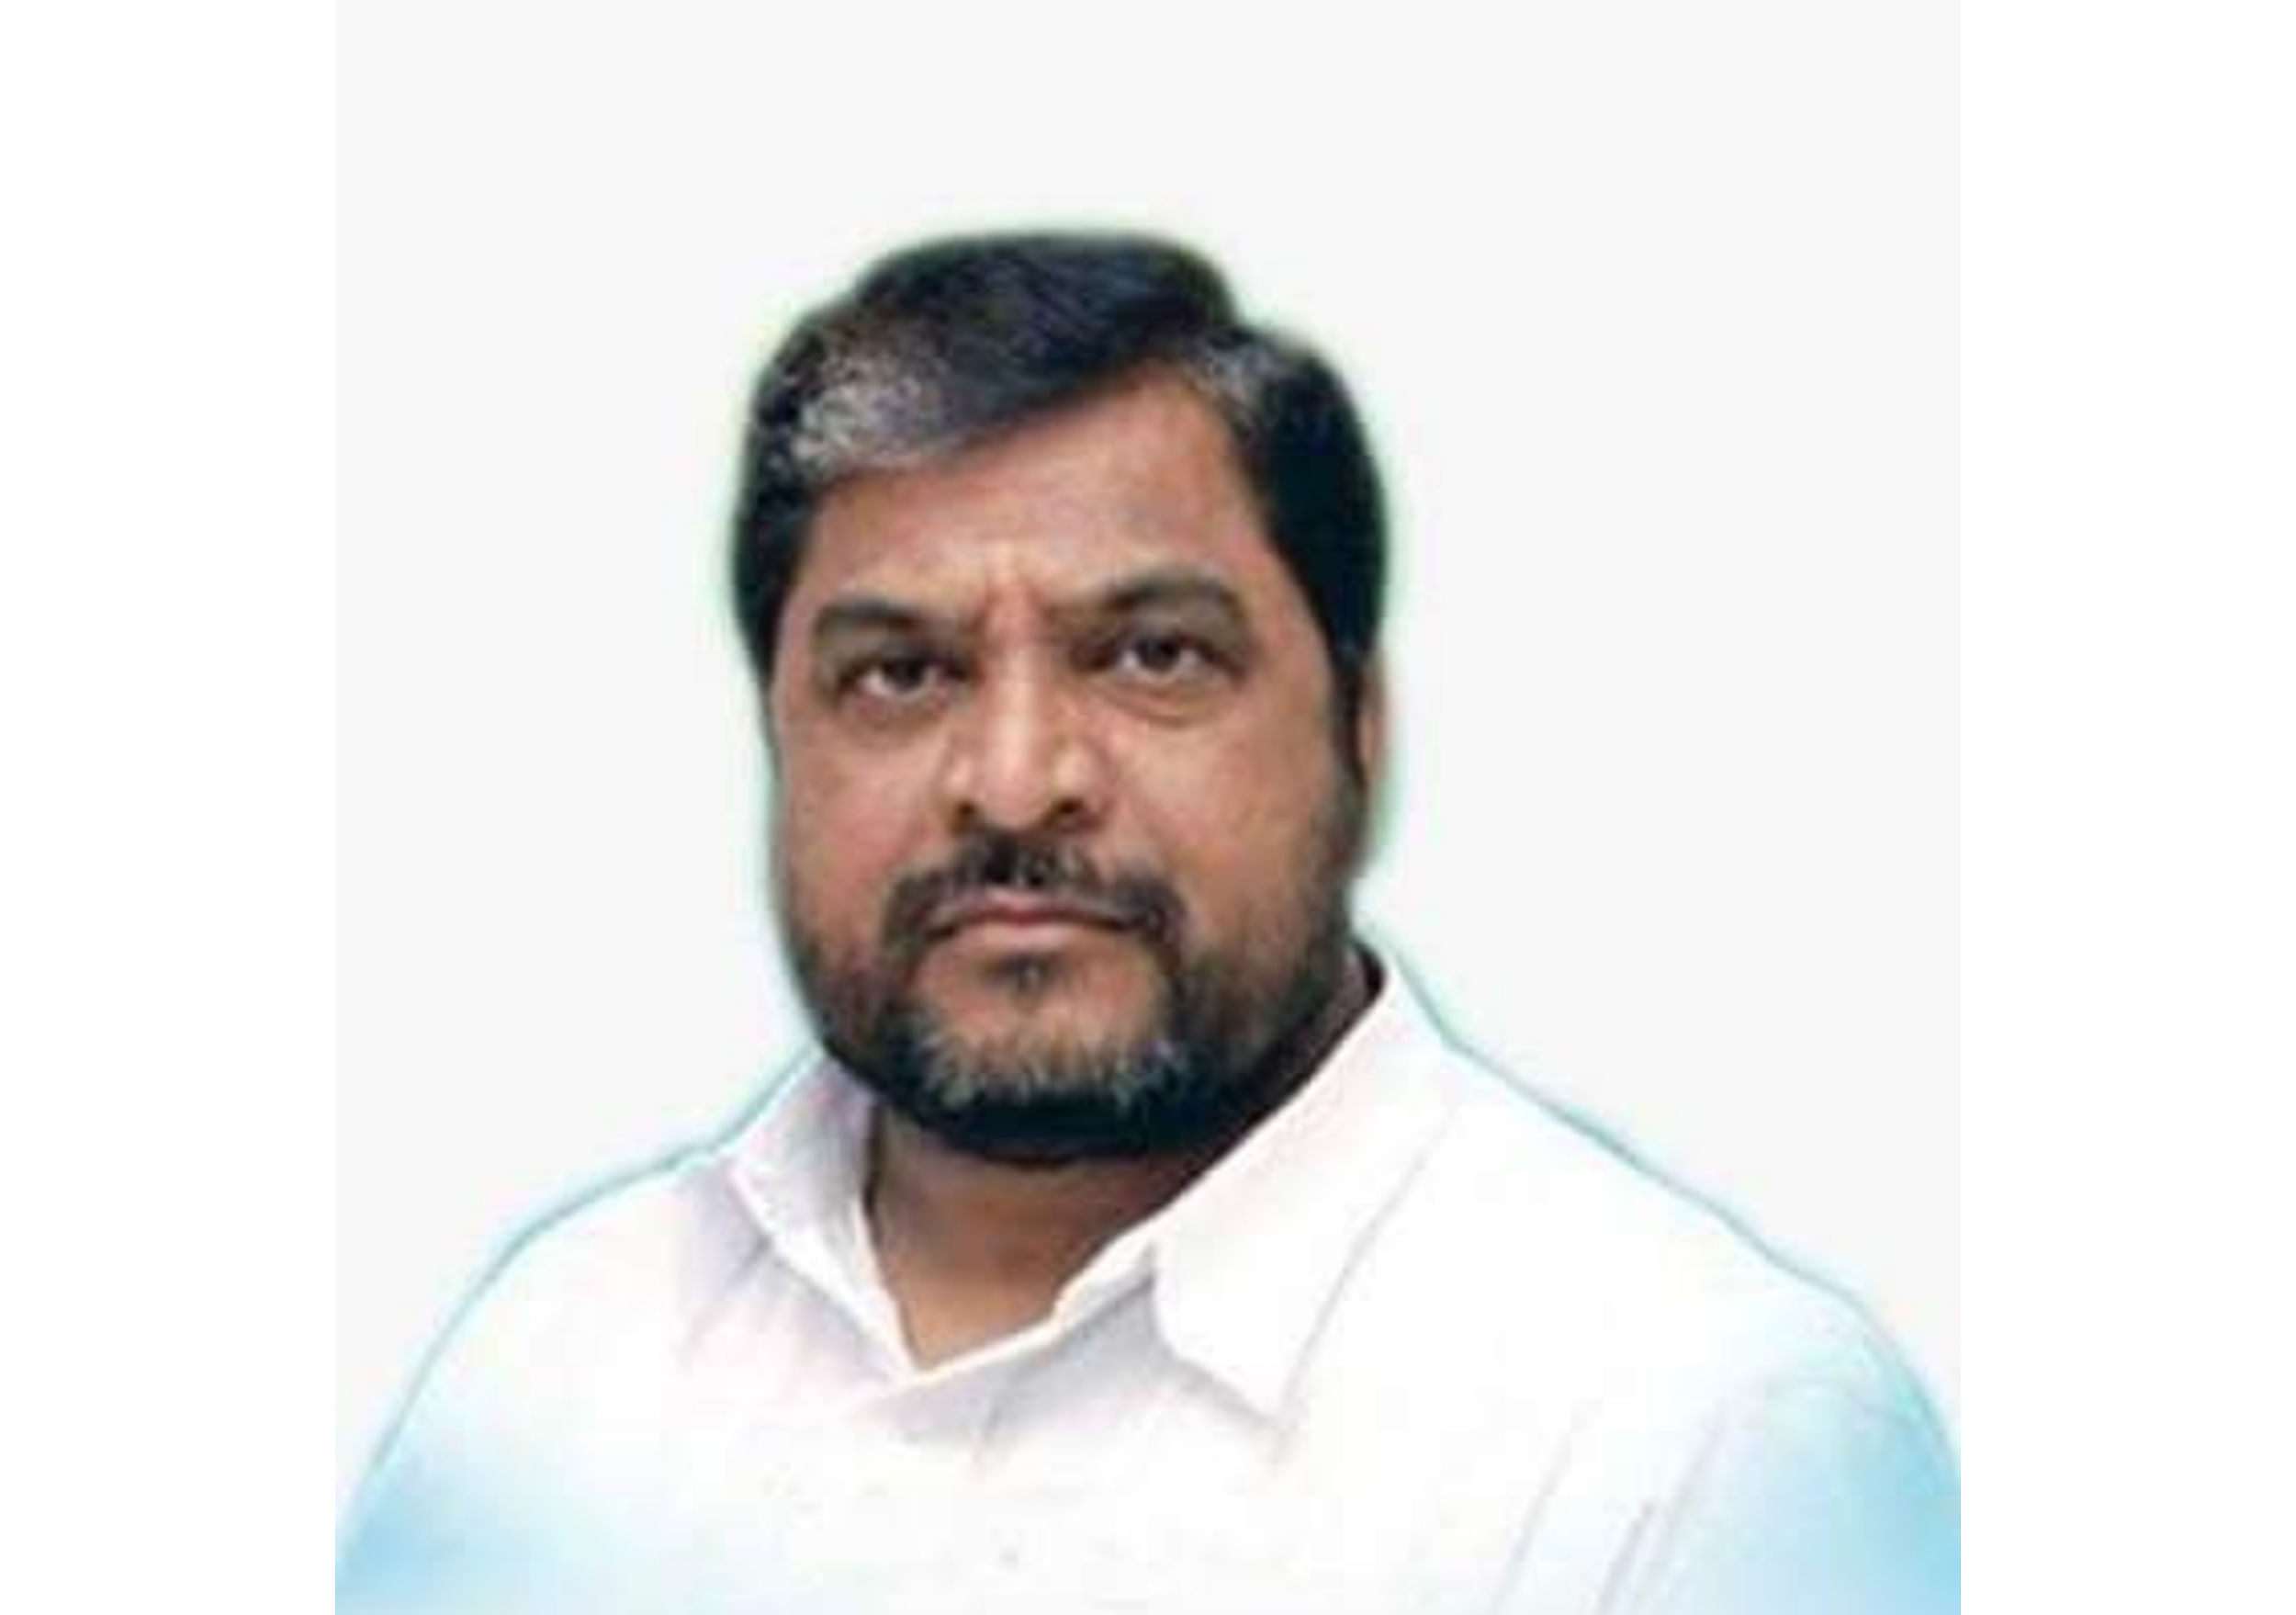 Swabhimani Paksha leader Raju Shetti (Twitter image/ @rajushetti)